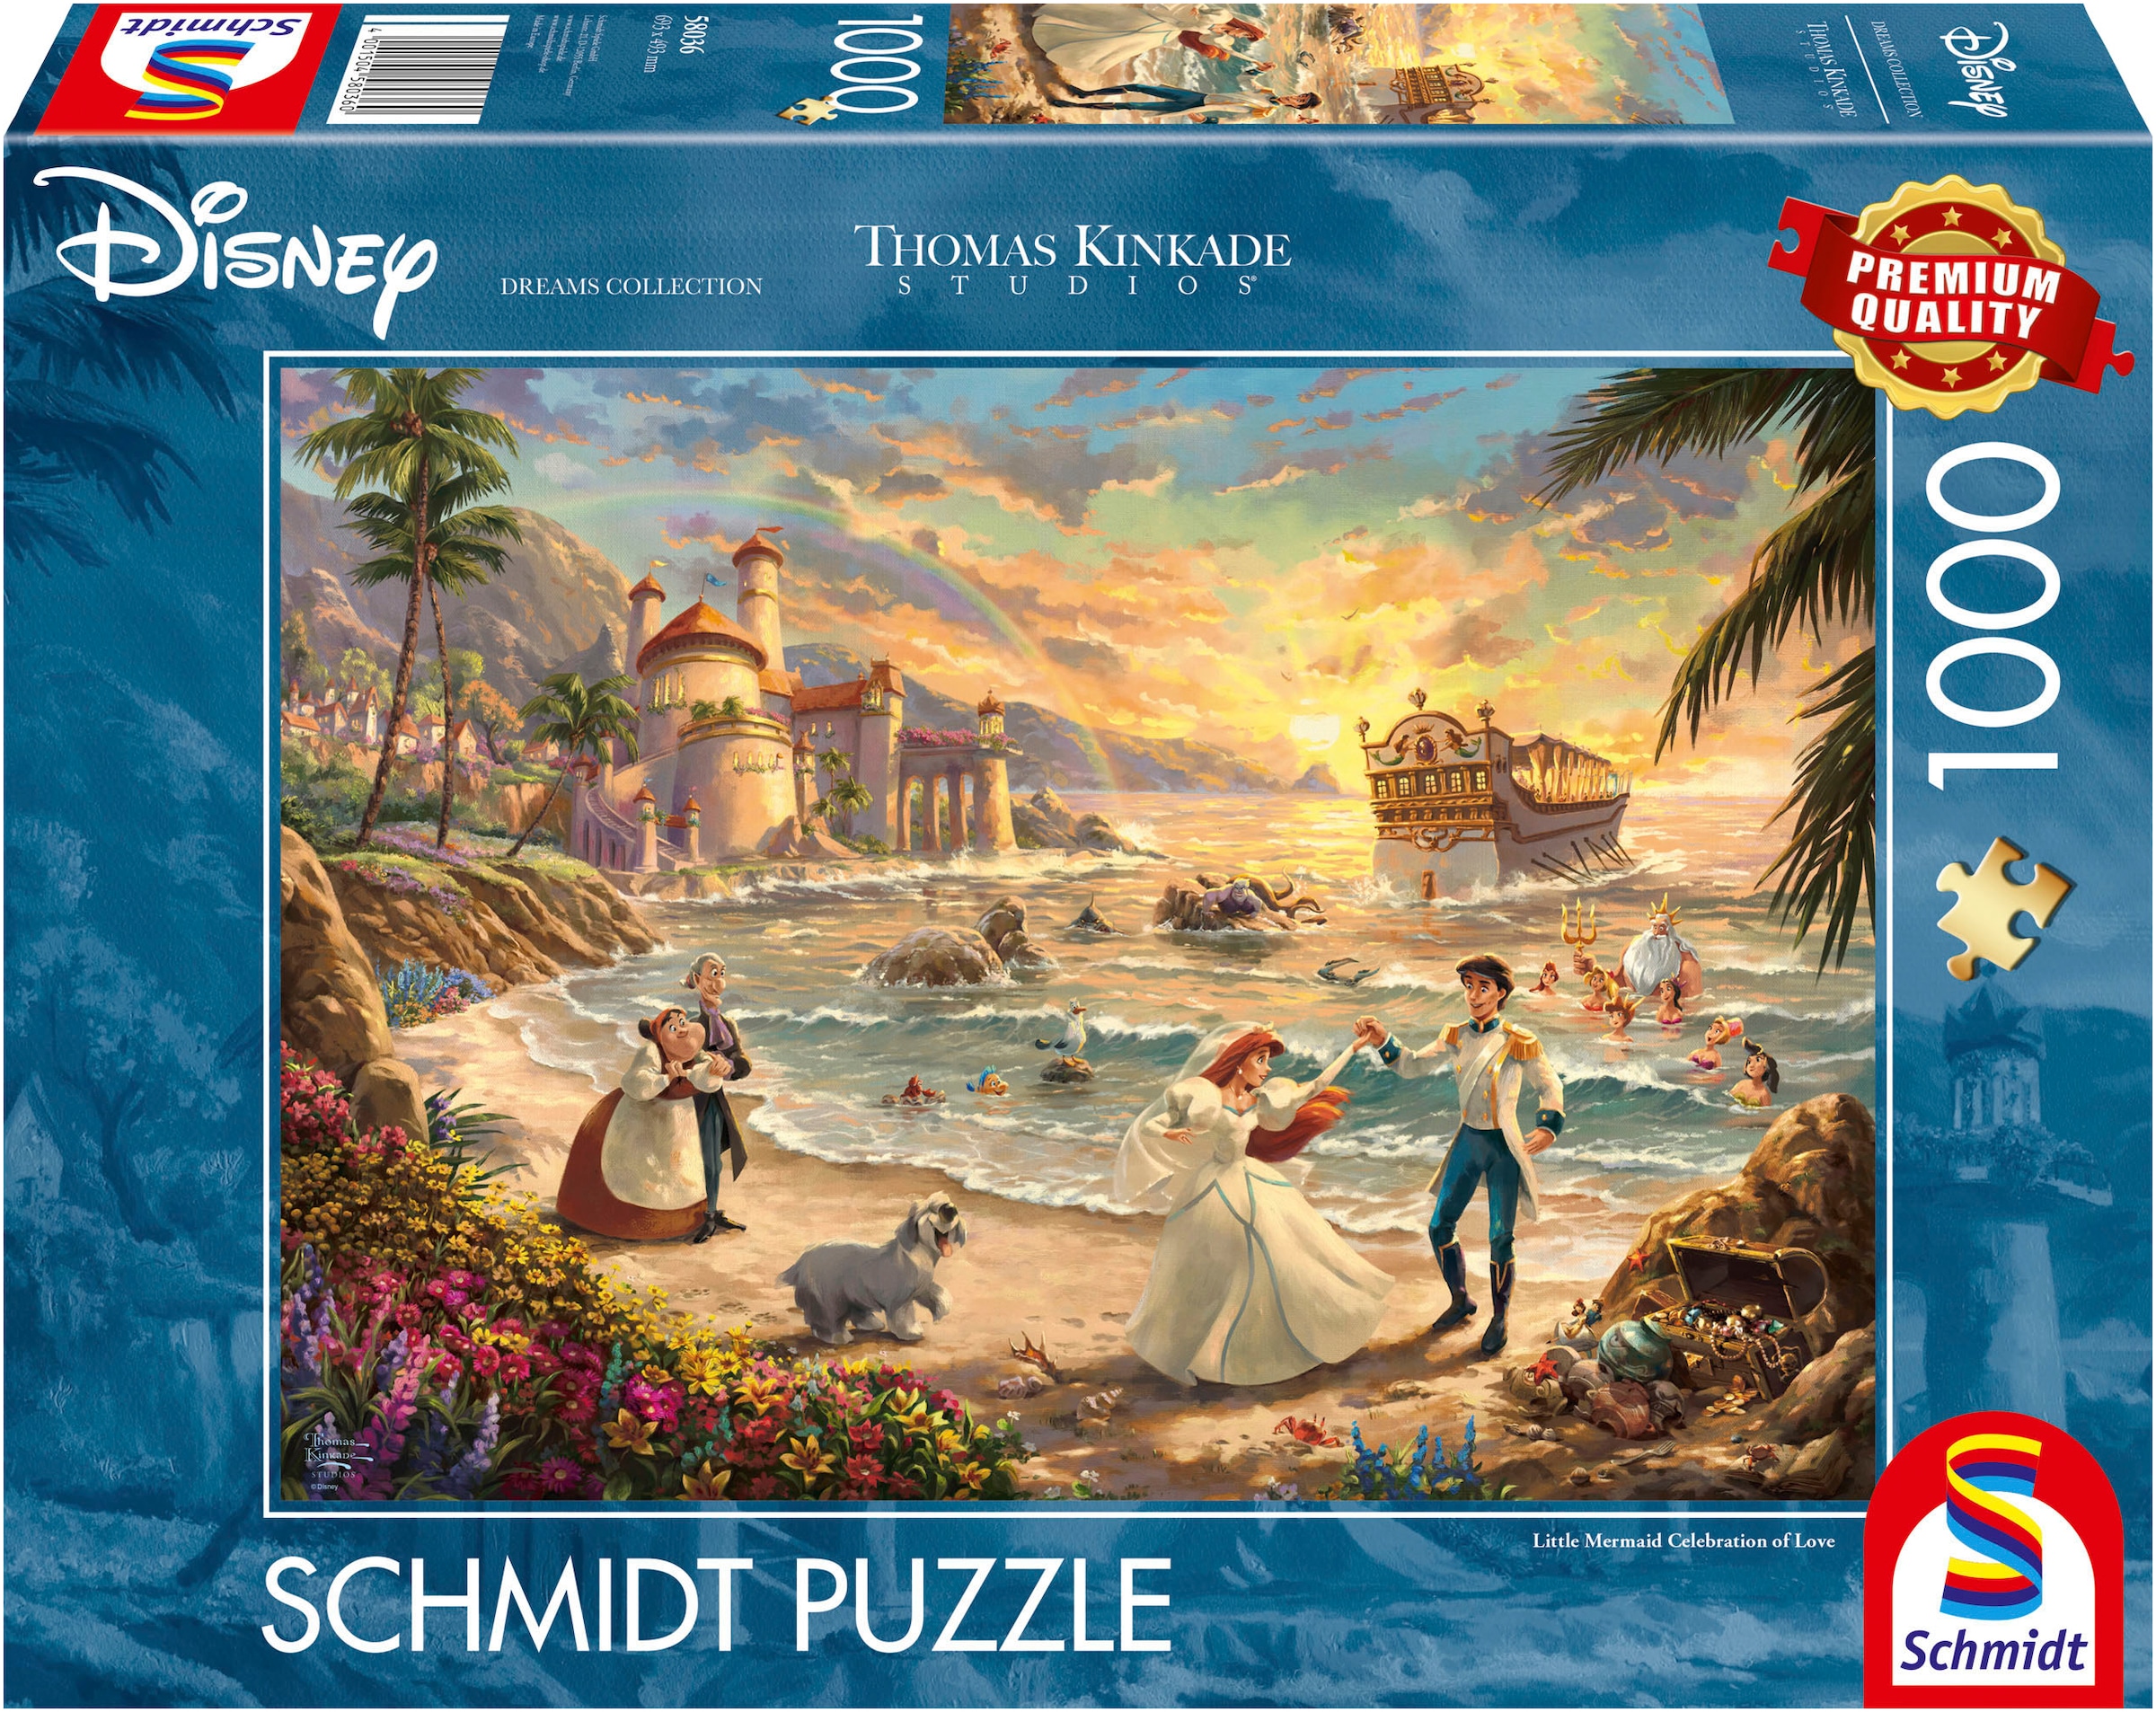 Puzzle »Disney, The Little Mermaid Celebration of Love von Thomas Kinkade«